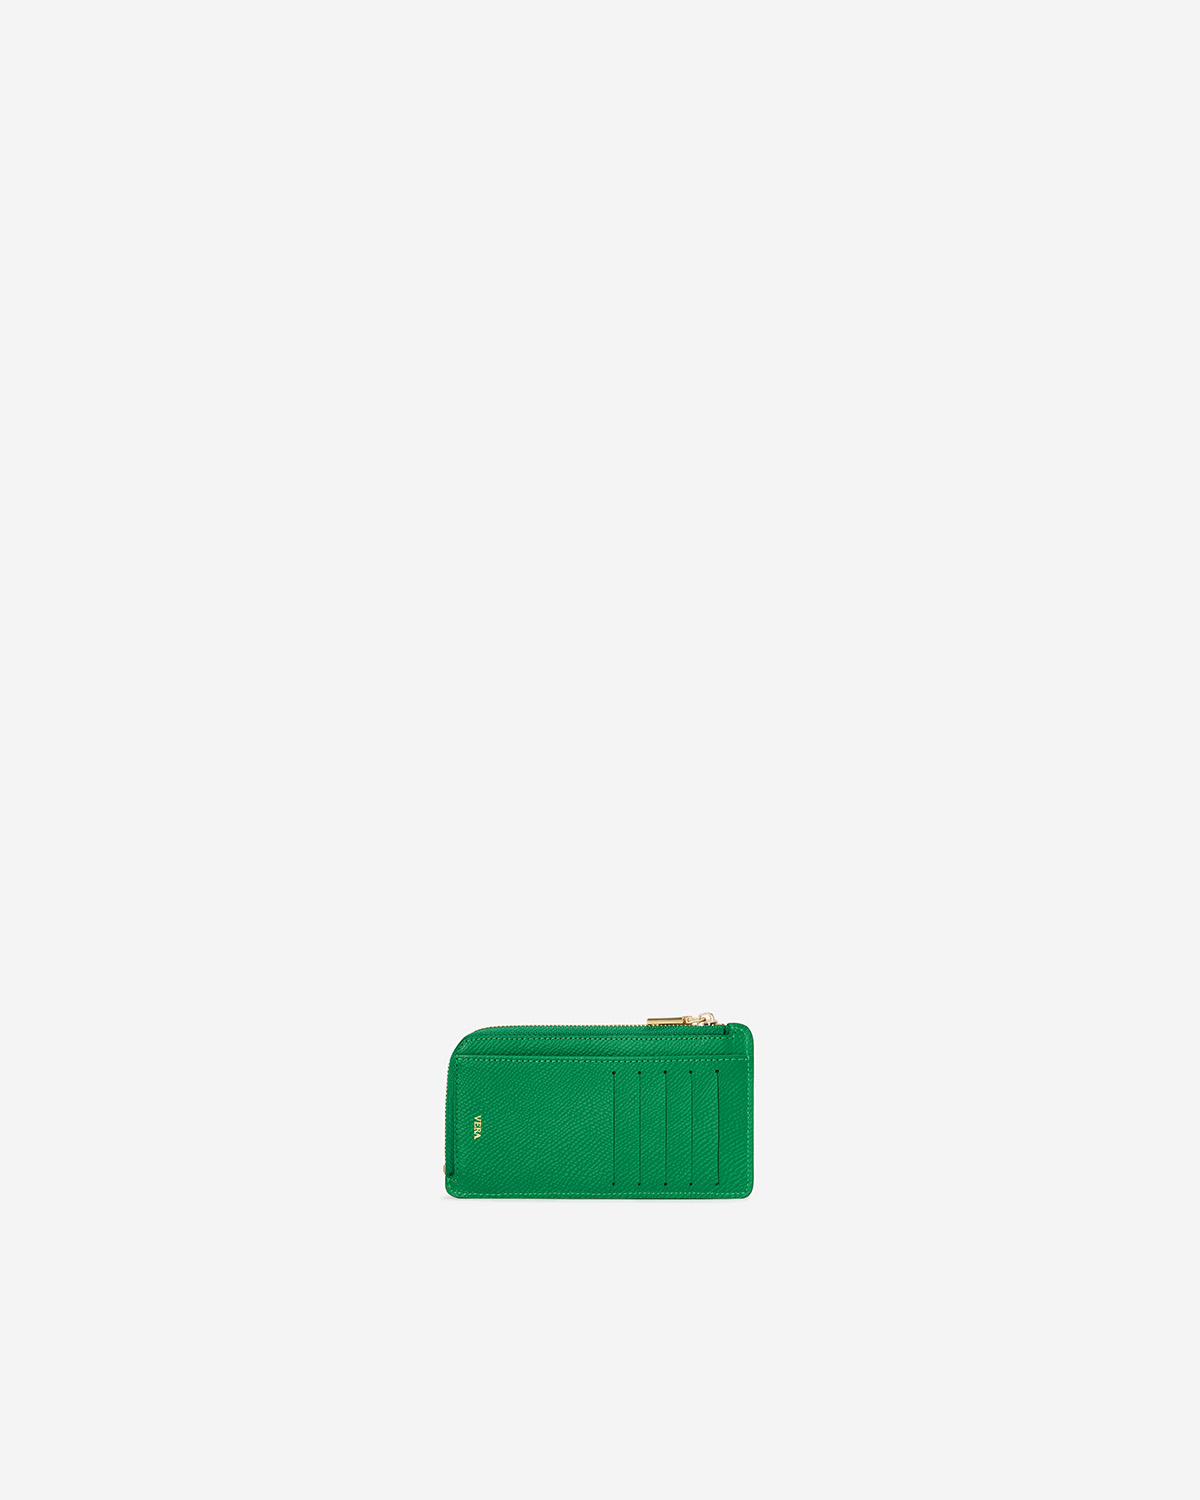 VERA Emily Long Card holder in Confident Green กระเป๋าใส่บัตรหนังแท้ ทรงยาว พร้อมช่องซิบ สีเขียว